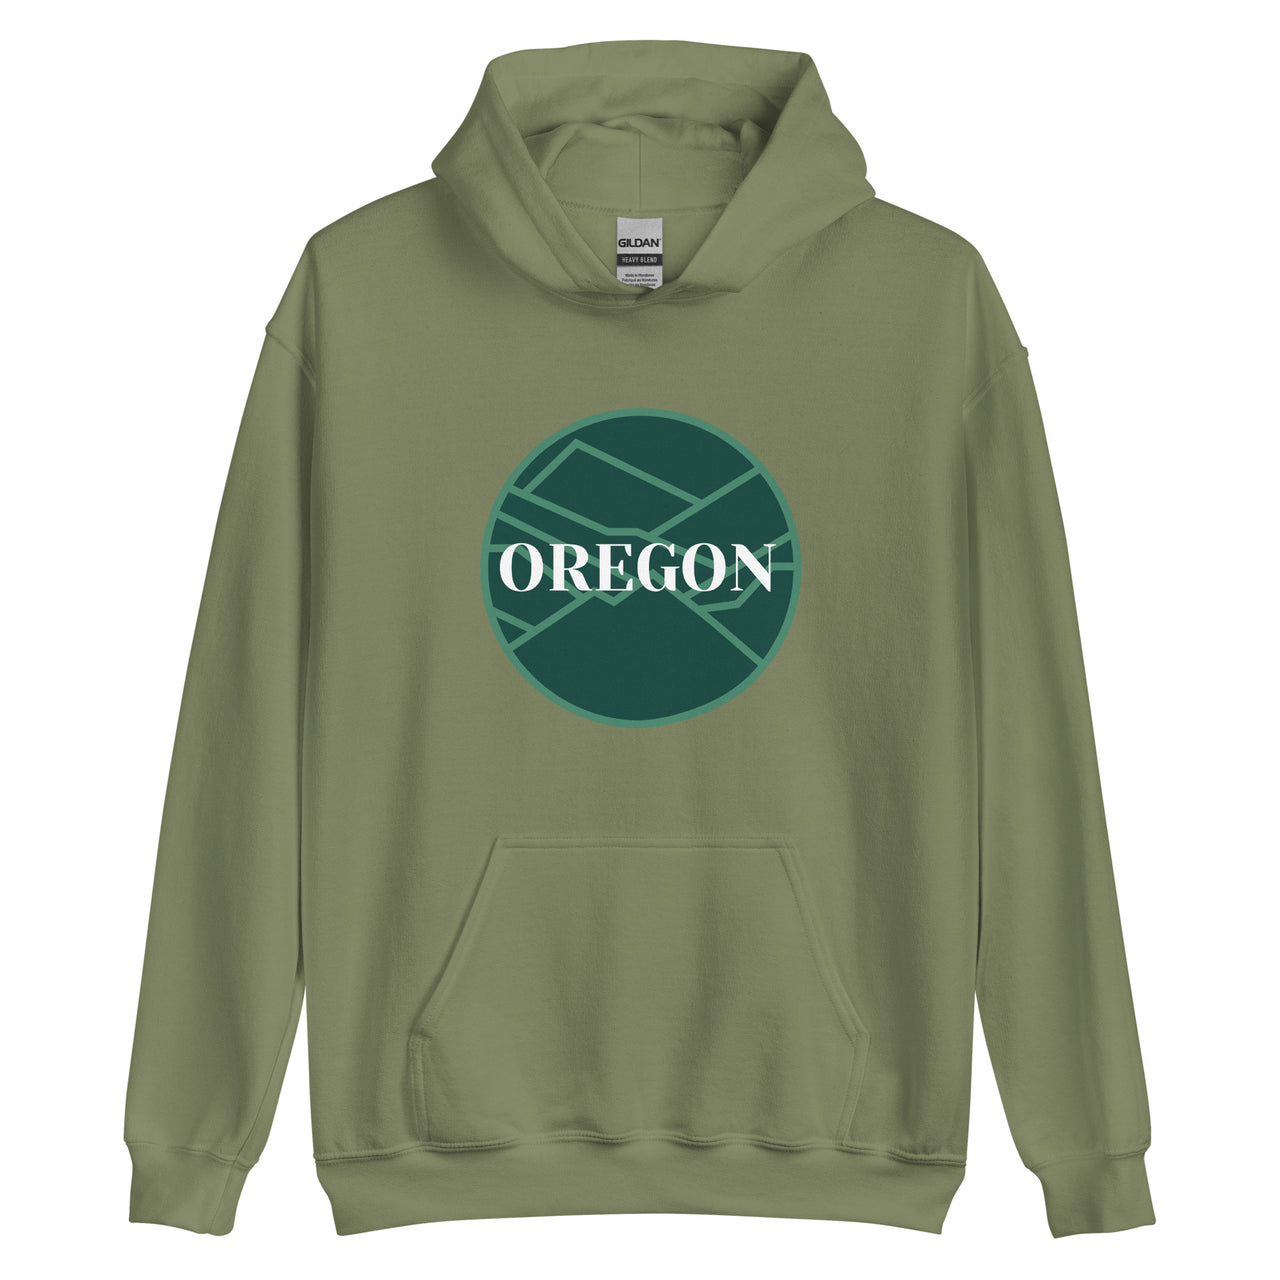 OREGON - Green - Unisex Hoodie